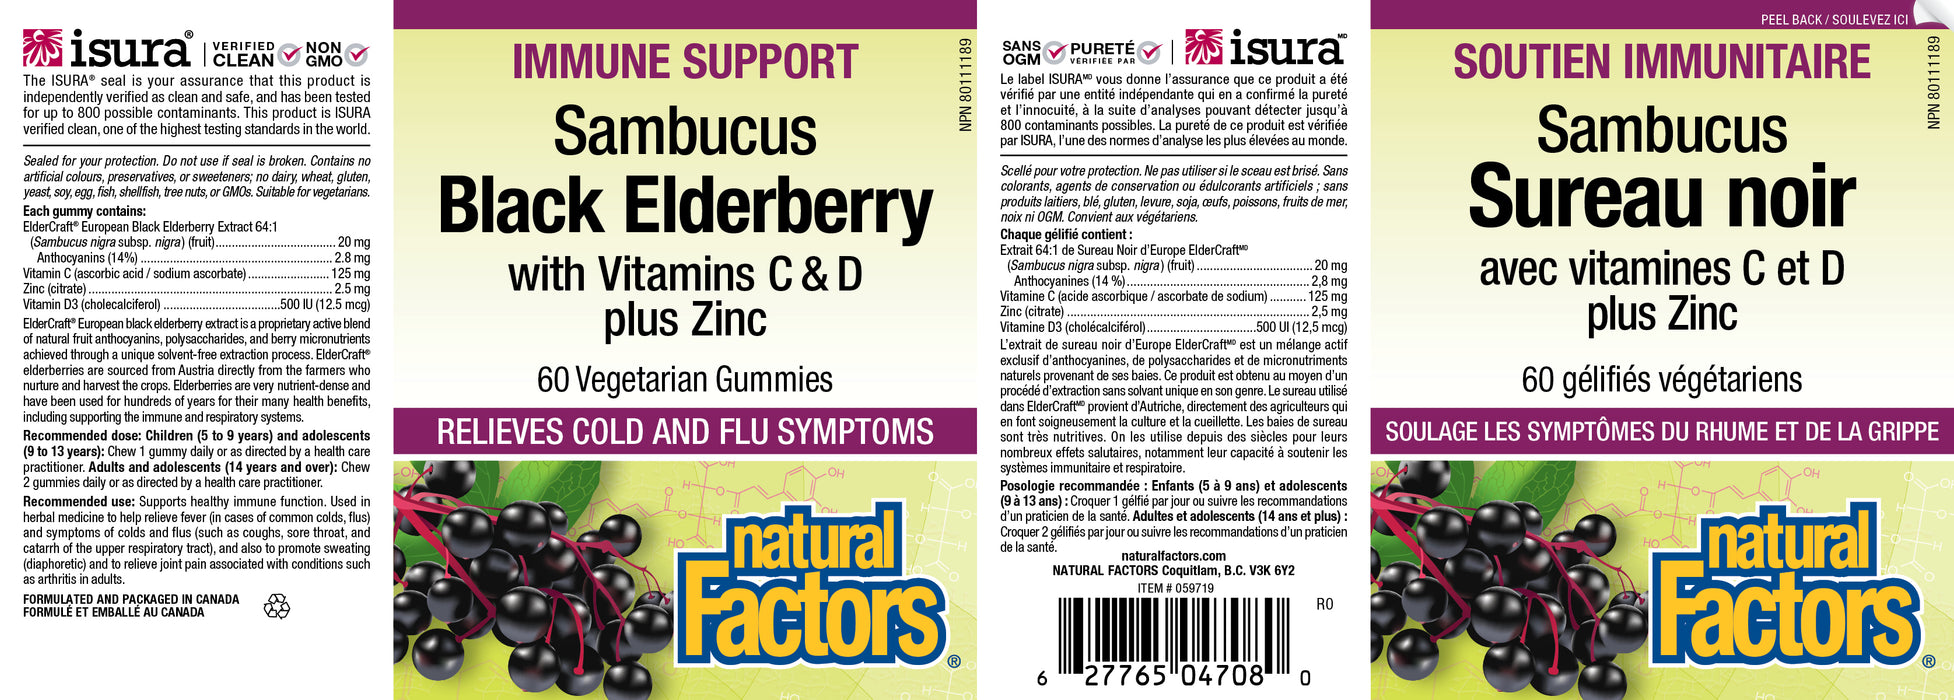 Natural Factors Sambucus Black Elderberry with Vitamins C & D plus Zinc 
60 Vegetarian Gummies